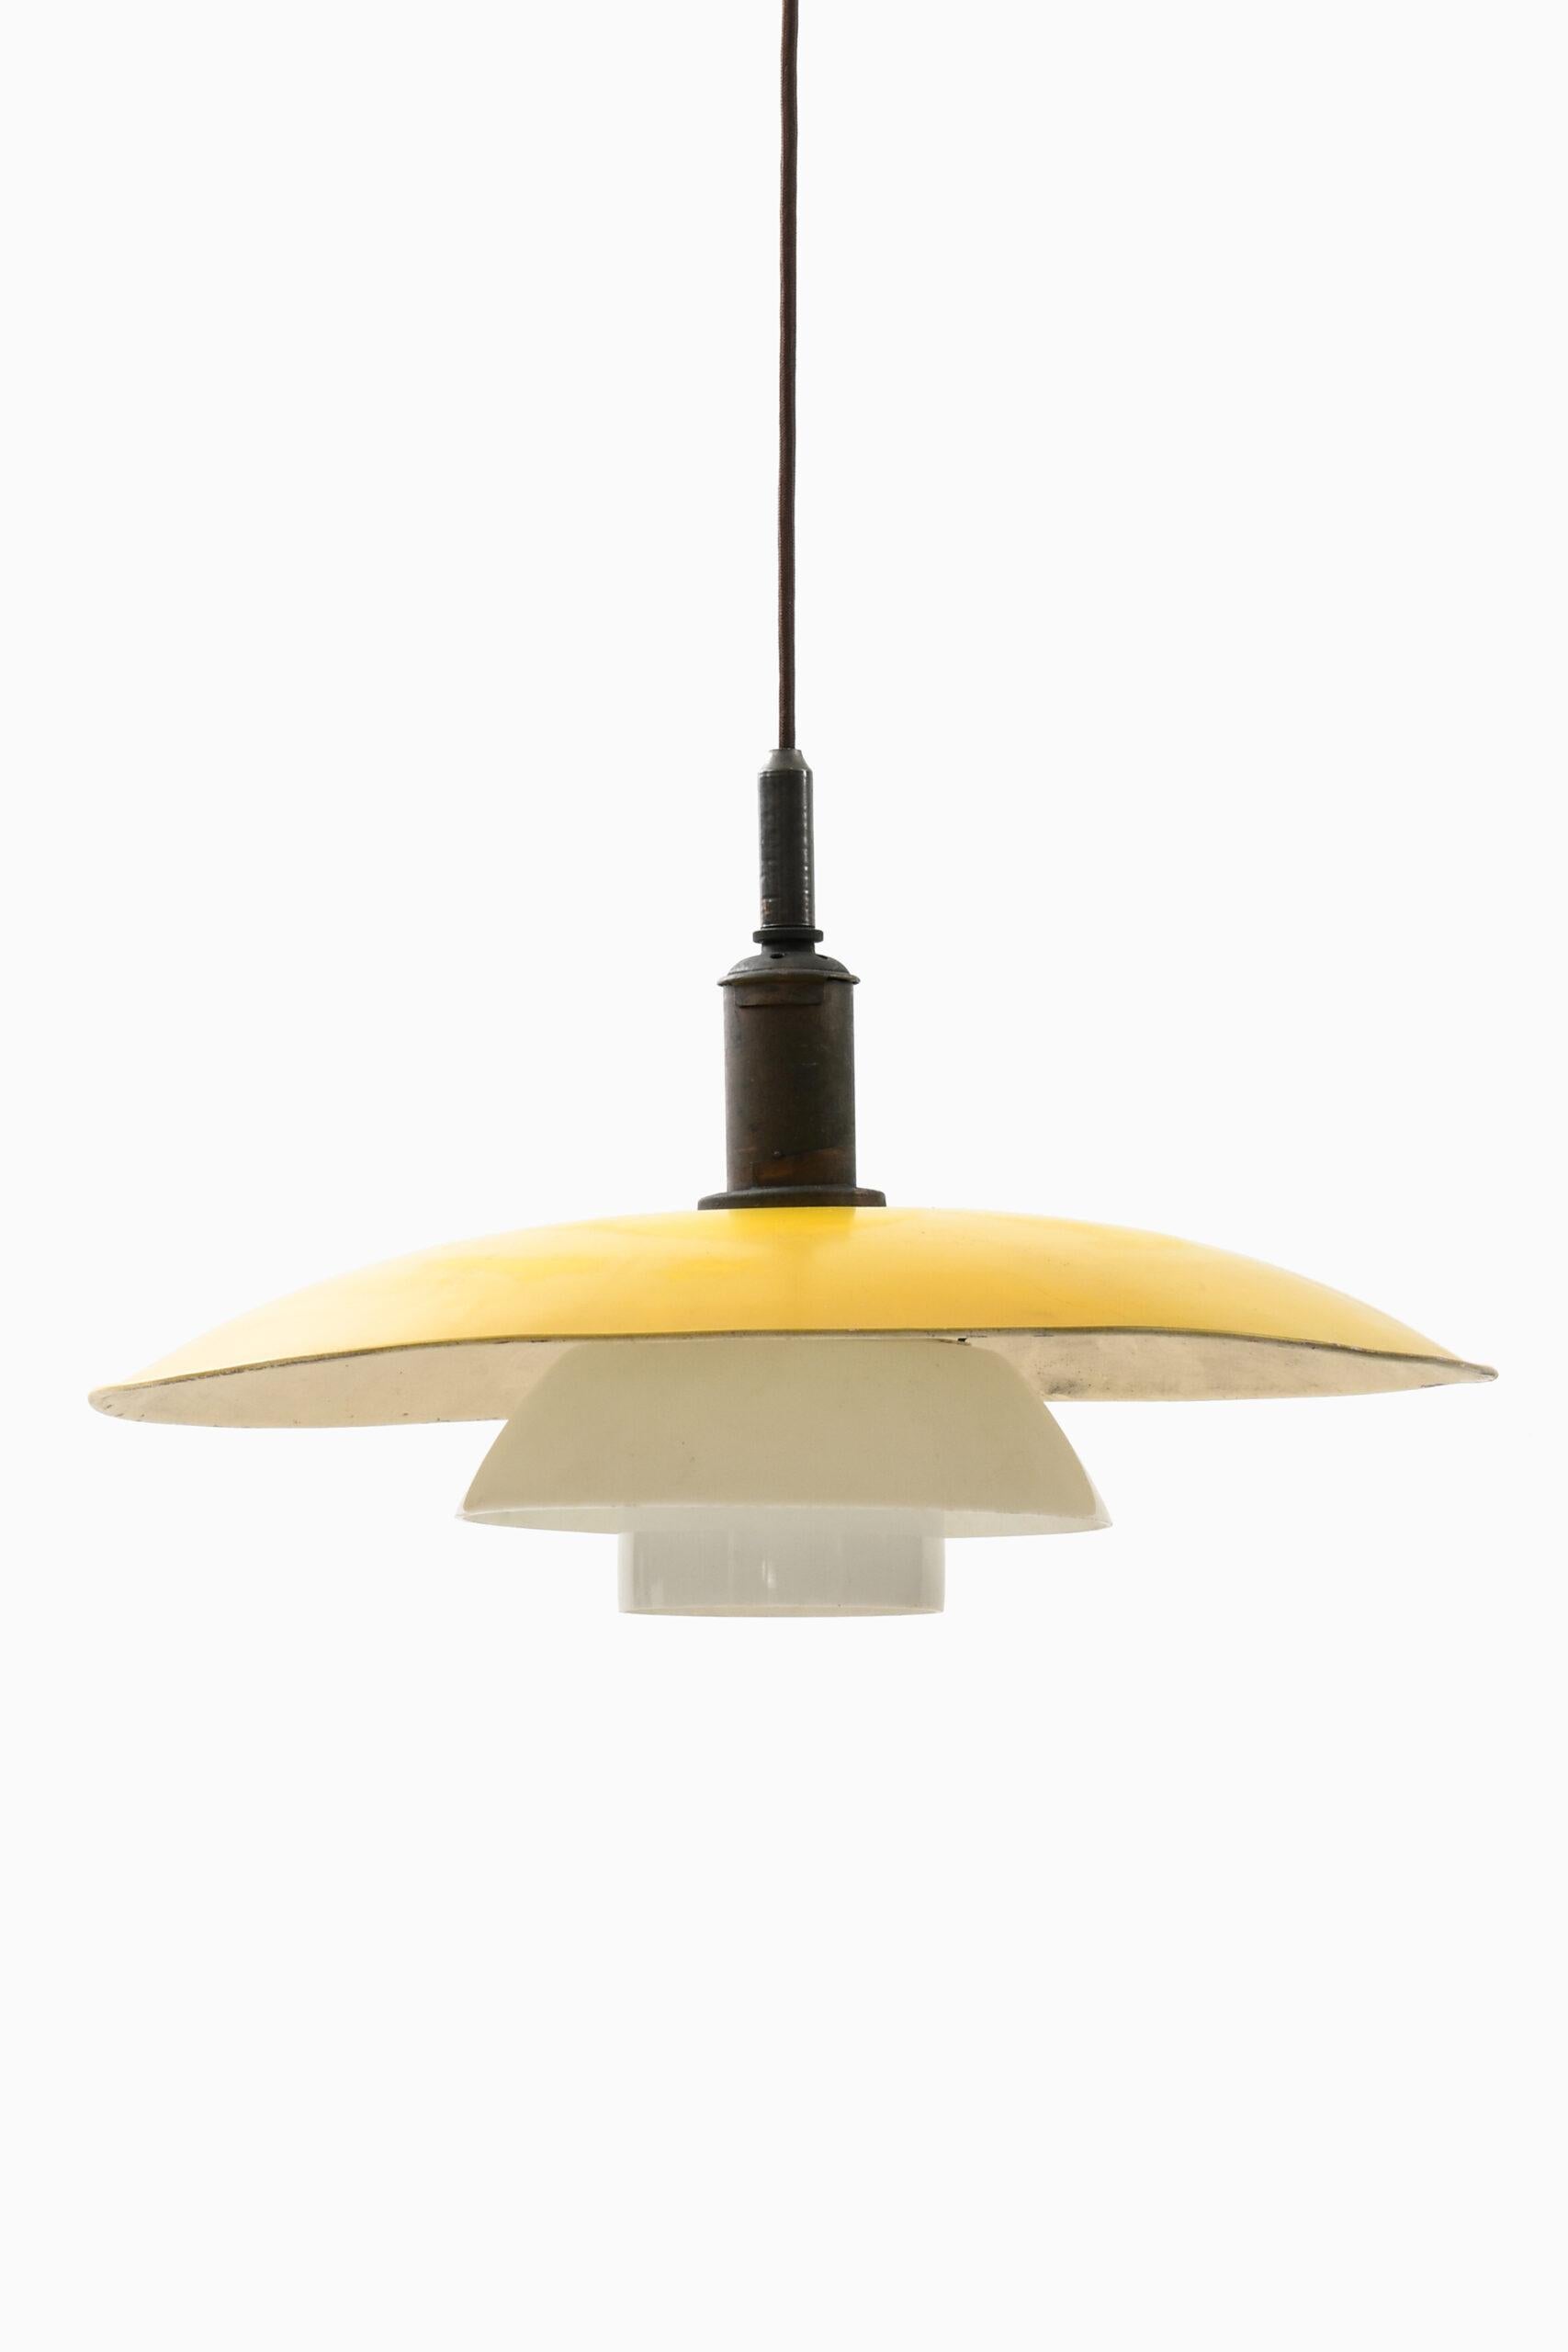 Poul Henningsen Ceiling Lamp PH-5/5 Produced by Louis Poulsen in Denmark 1